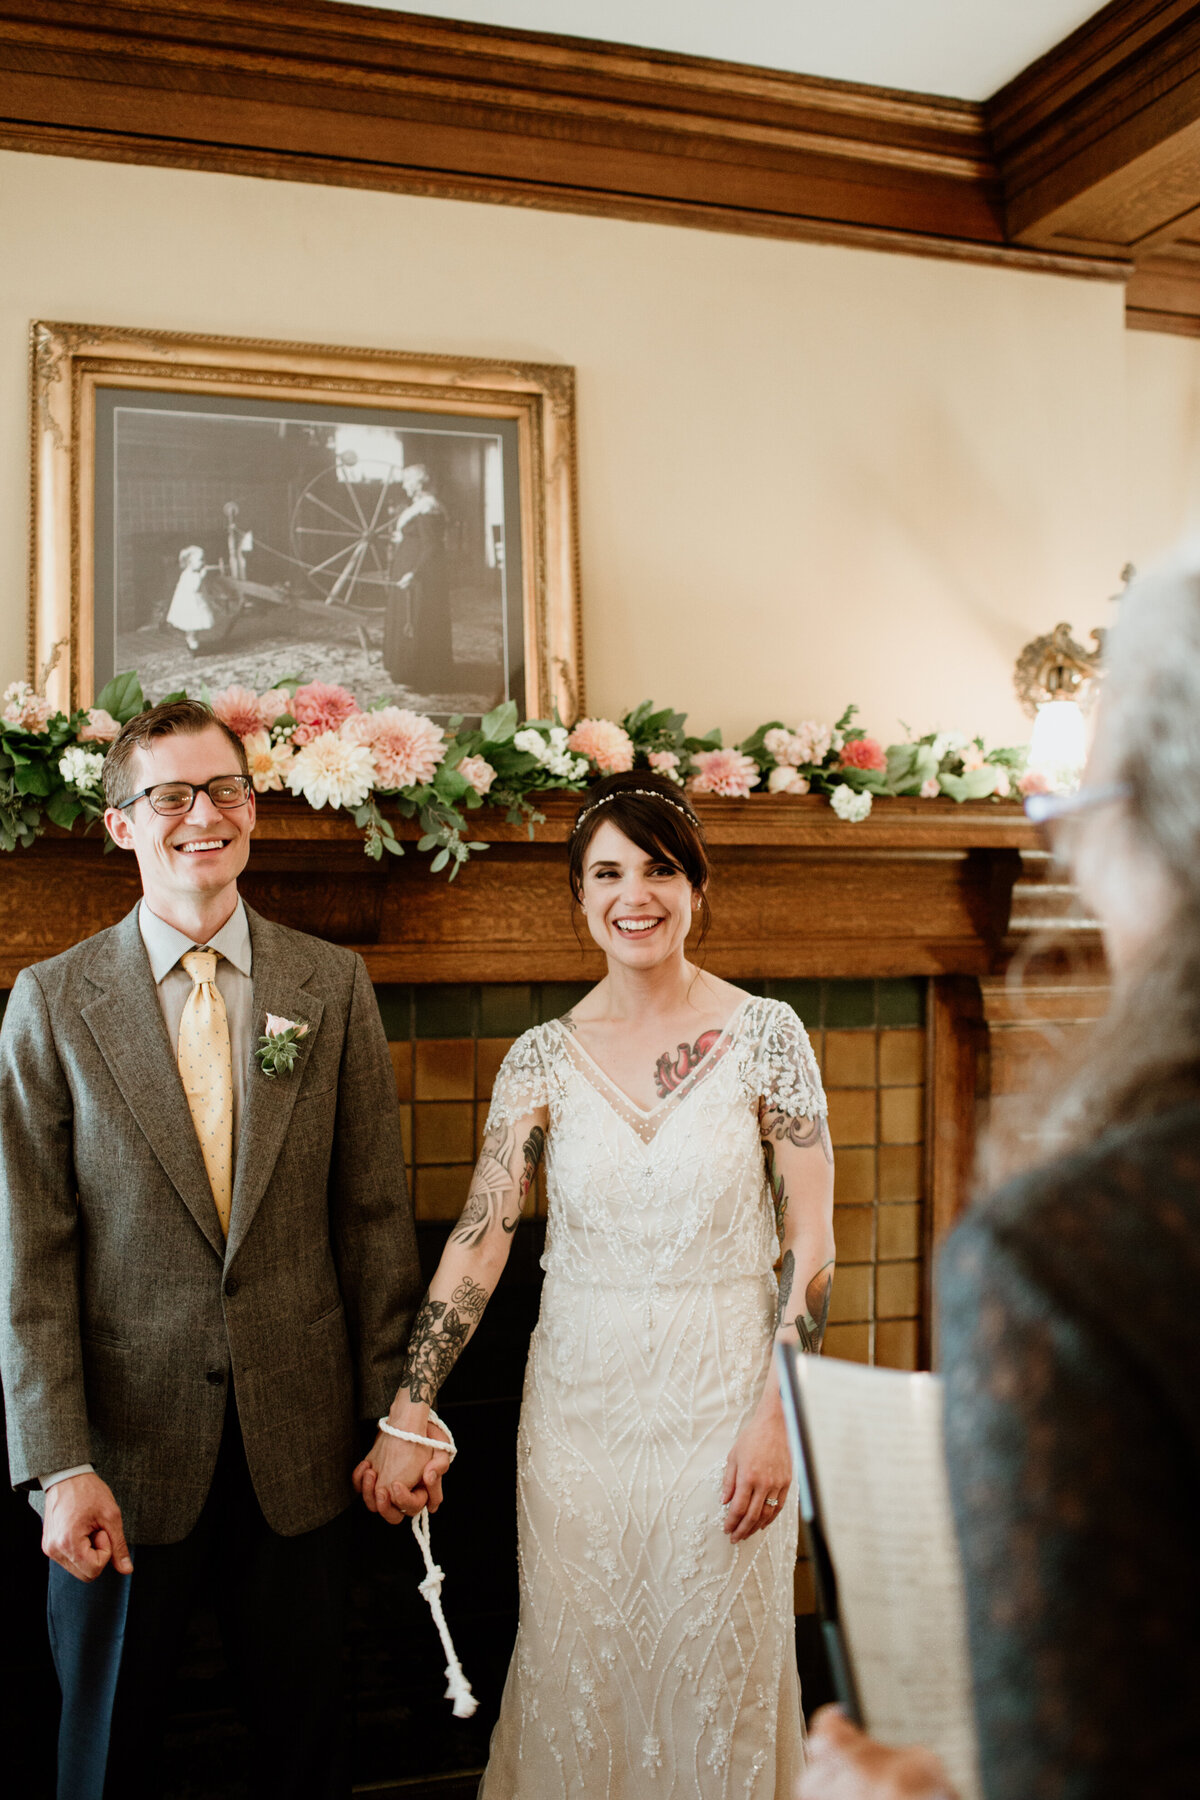 Wedding Photographer serving Fort Worth | Dallas | DFW | Texas - Megan Christine Studio